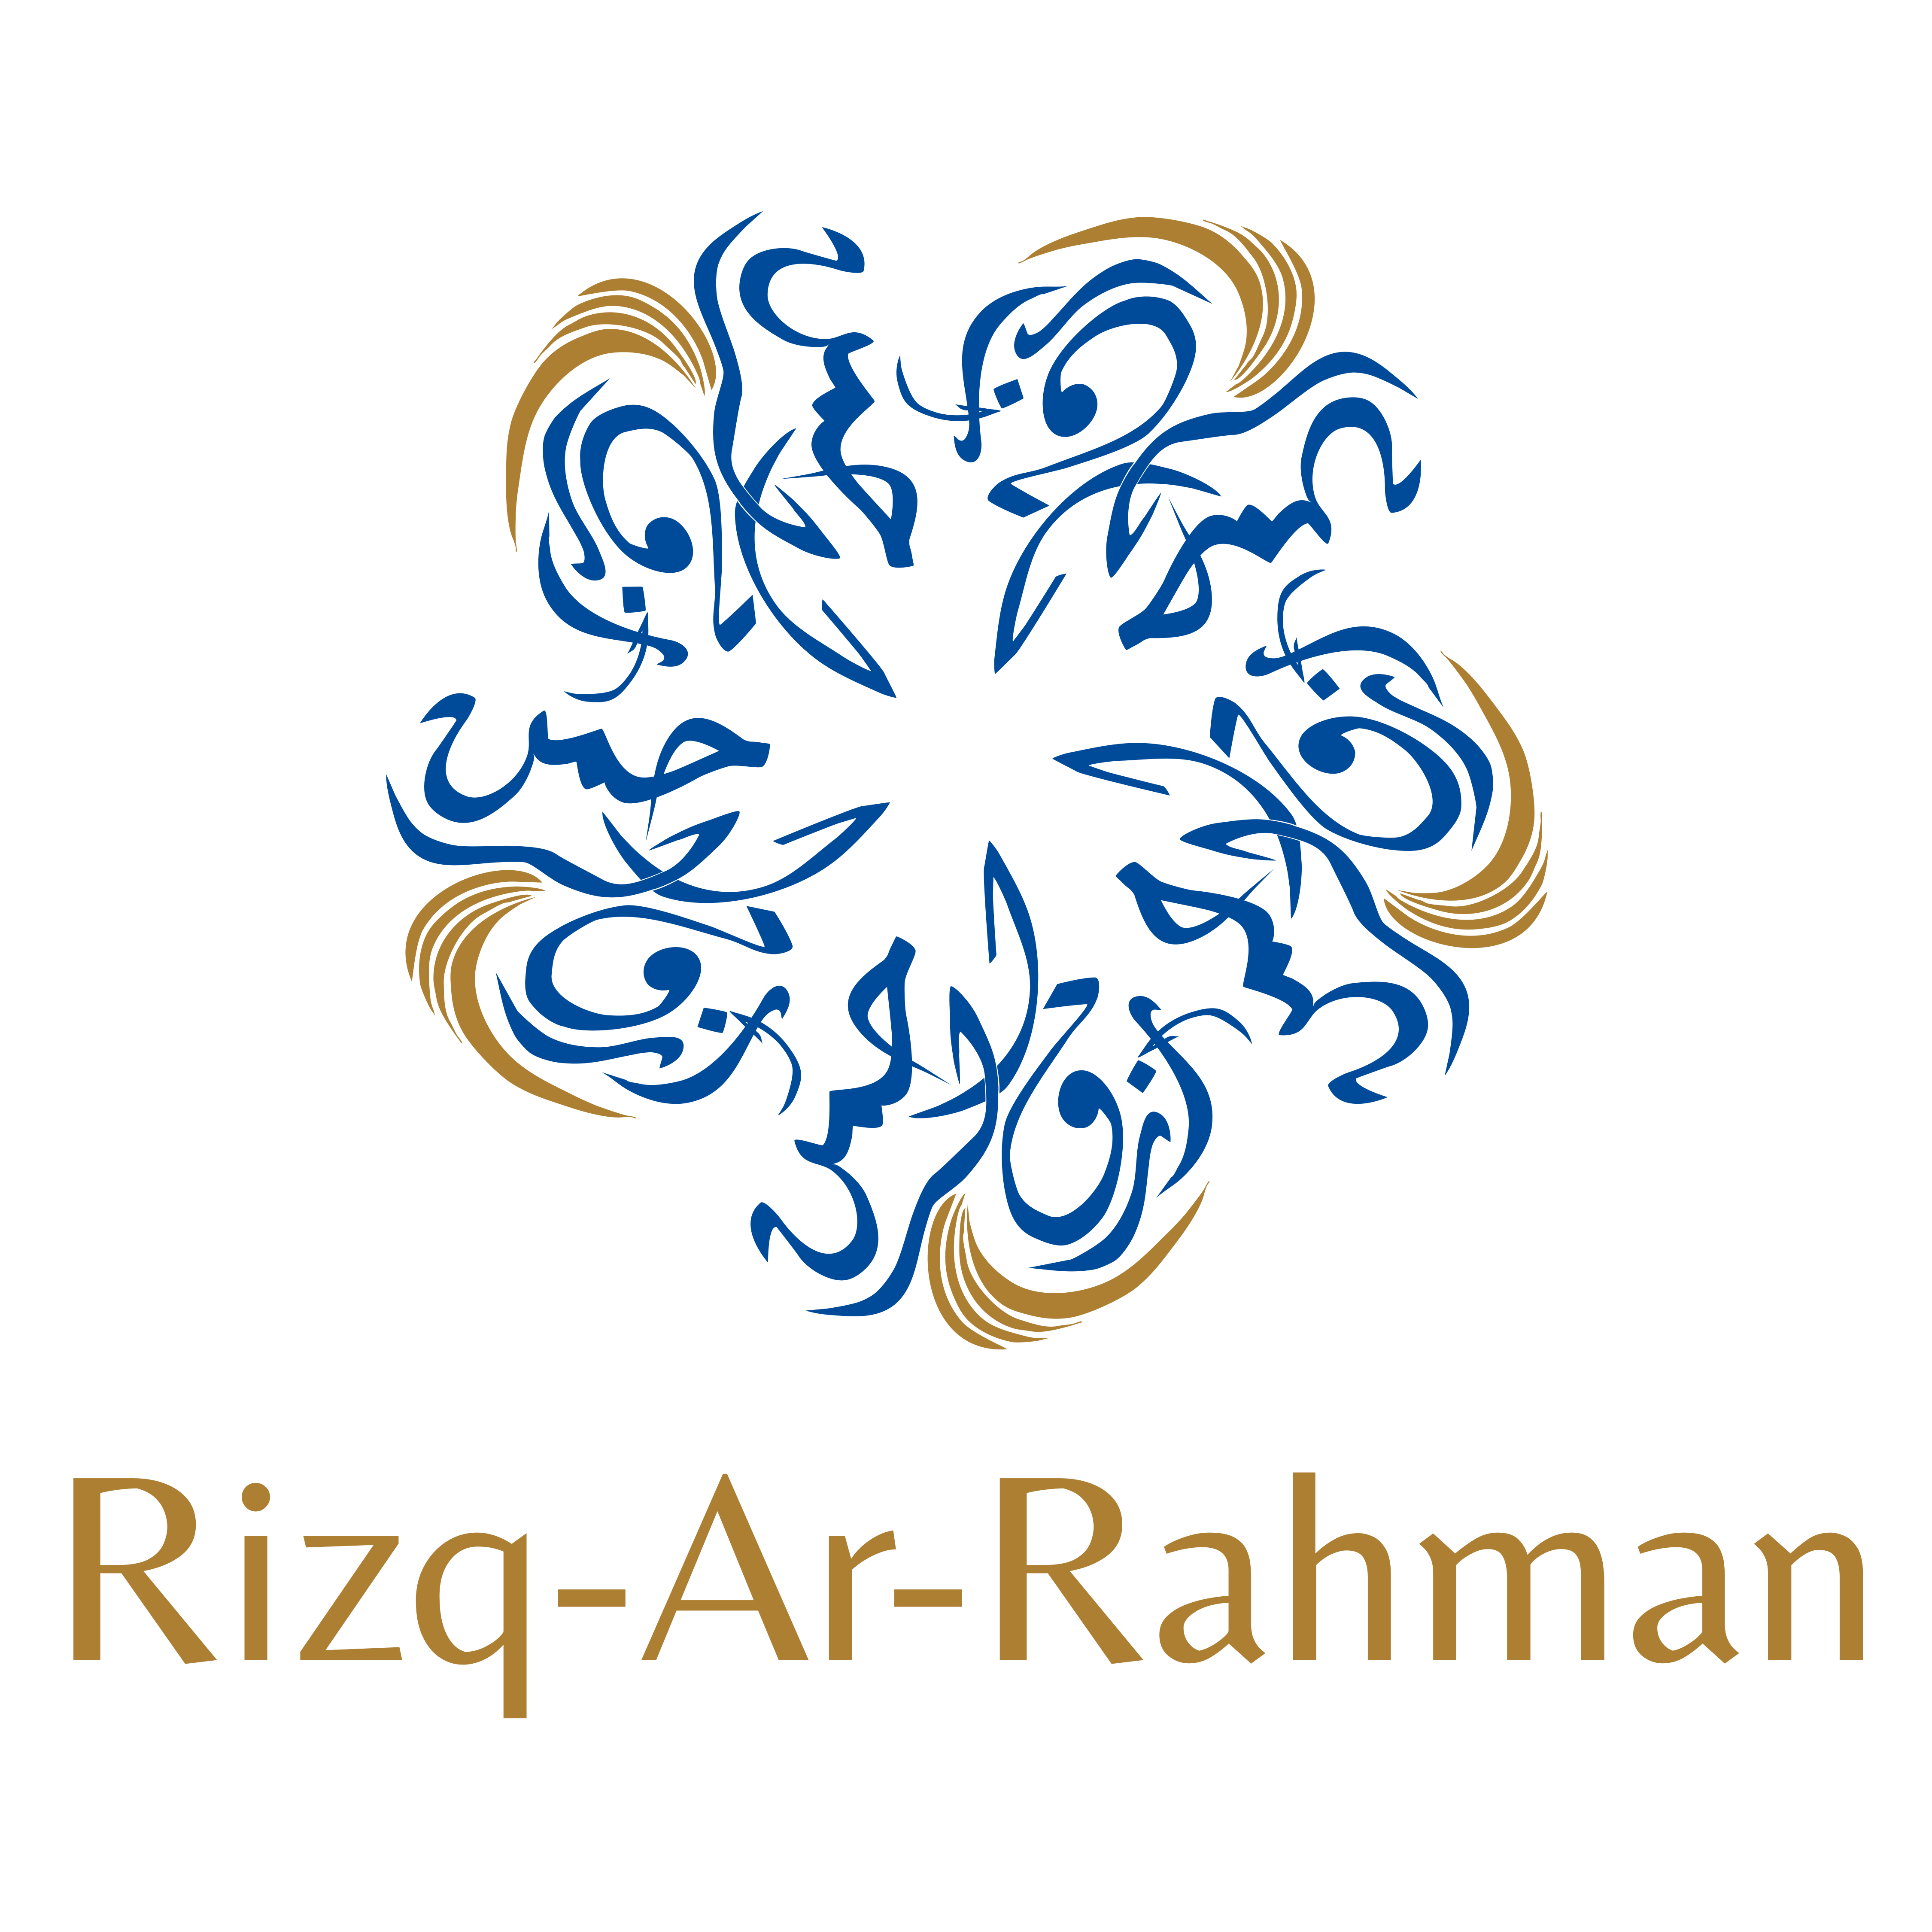 Rizq Ar Rahman | Serving Humanity